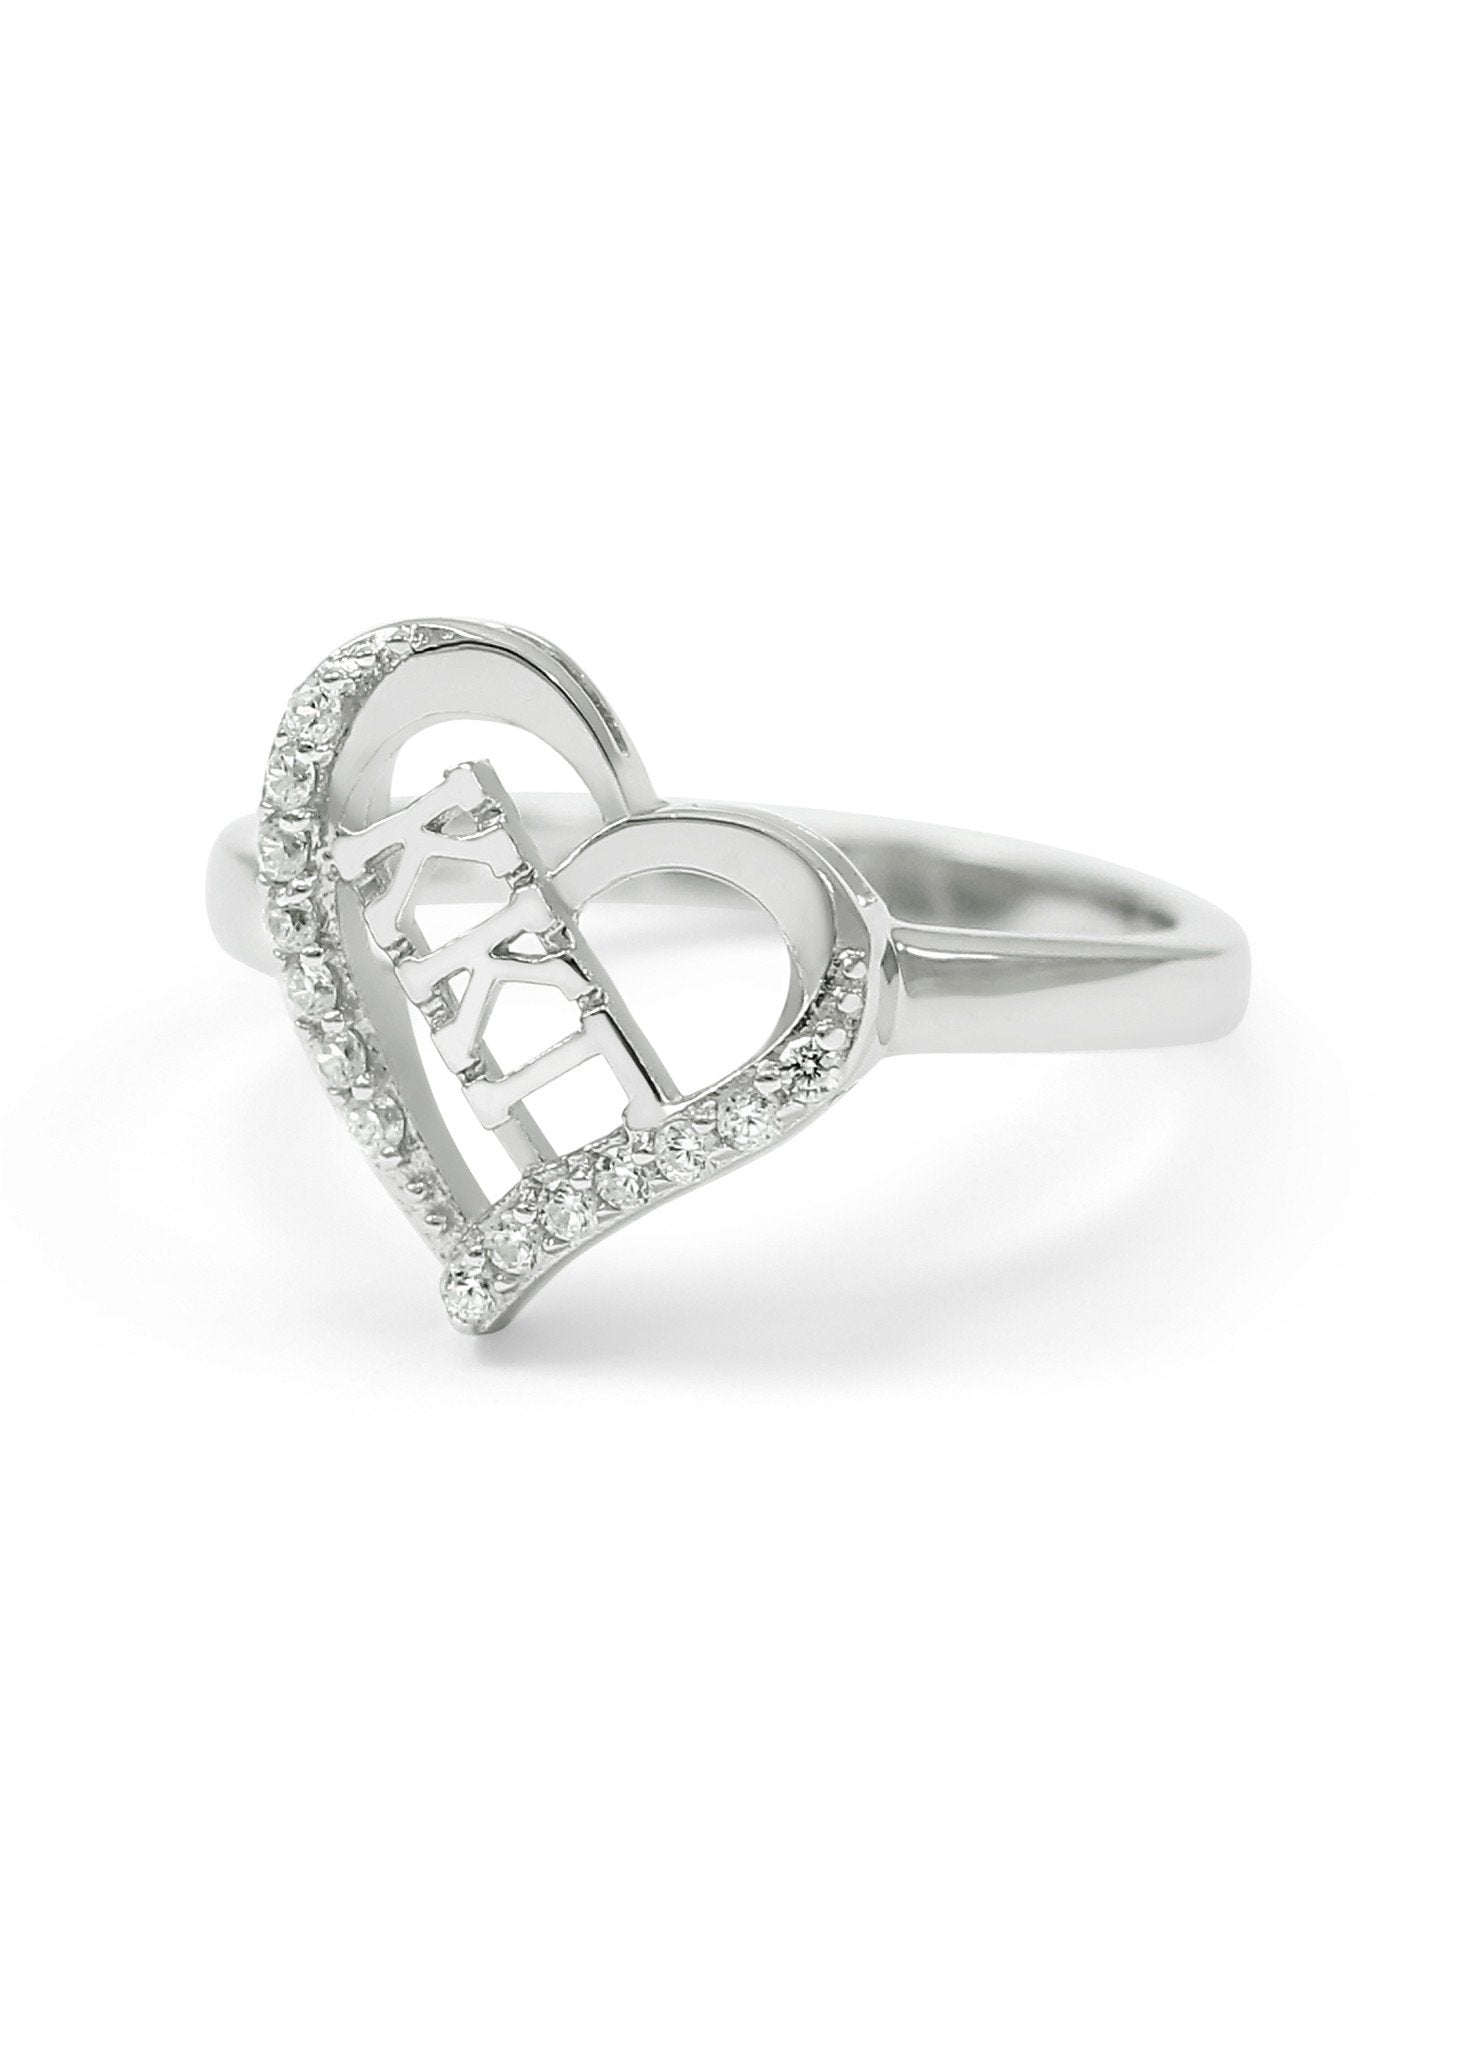 Real 925 Sterling Silver Heart Shape White CZ Women ring | eBay